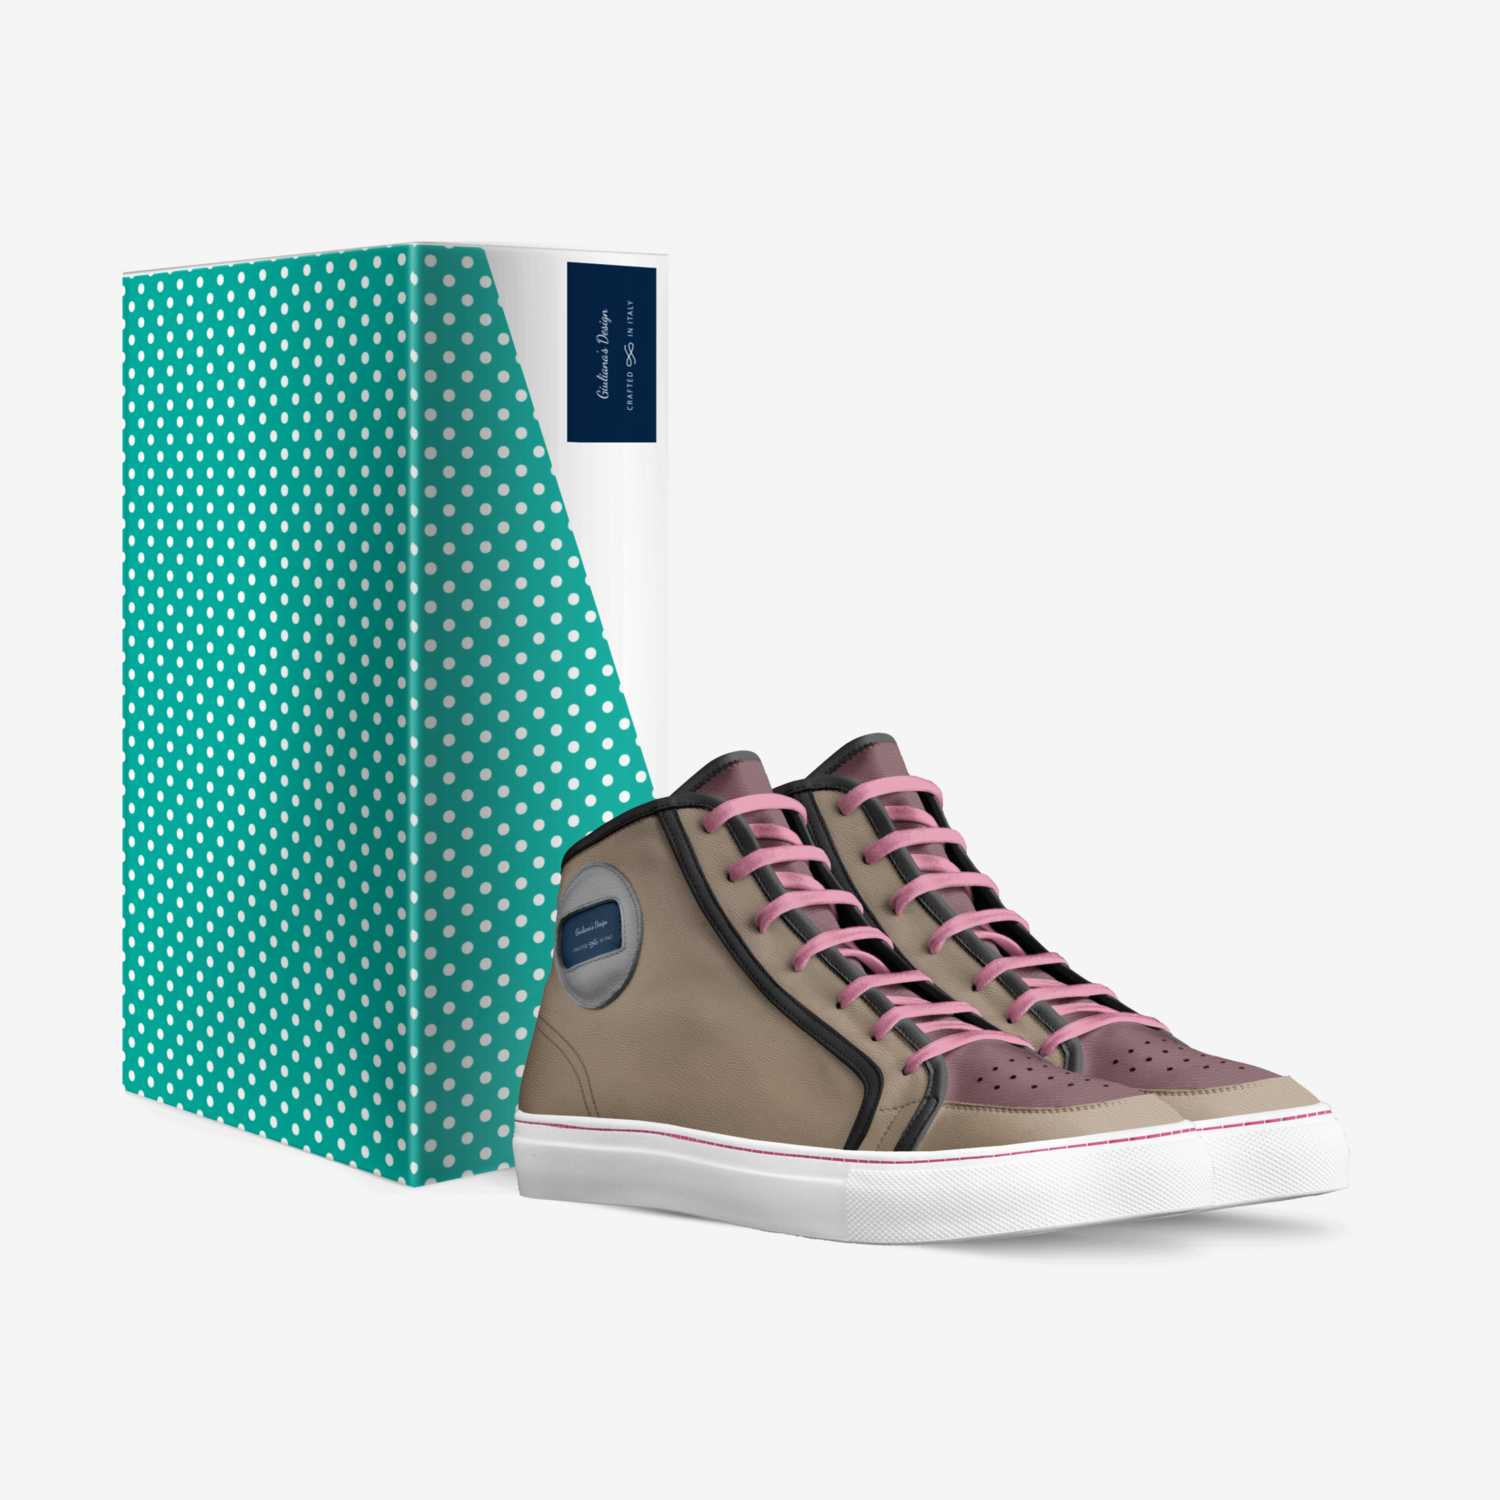 Giuliana's Design custom made in Italy shoes by Thomas Major | Box view